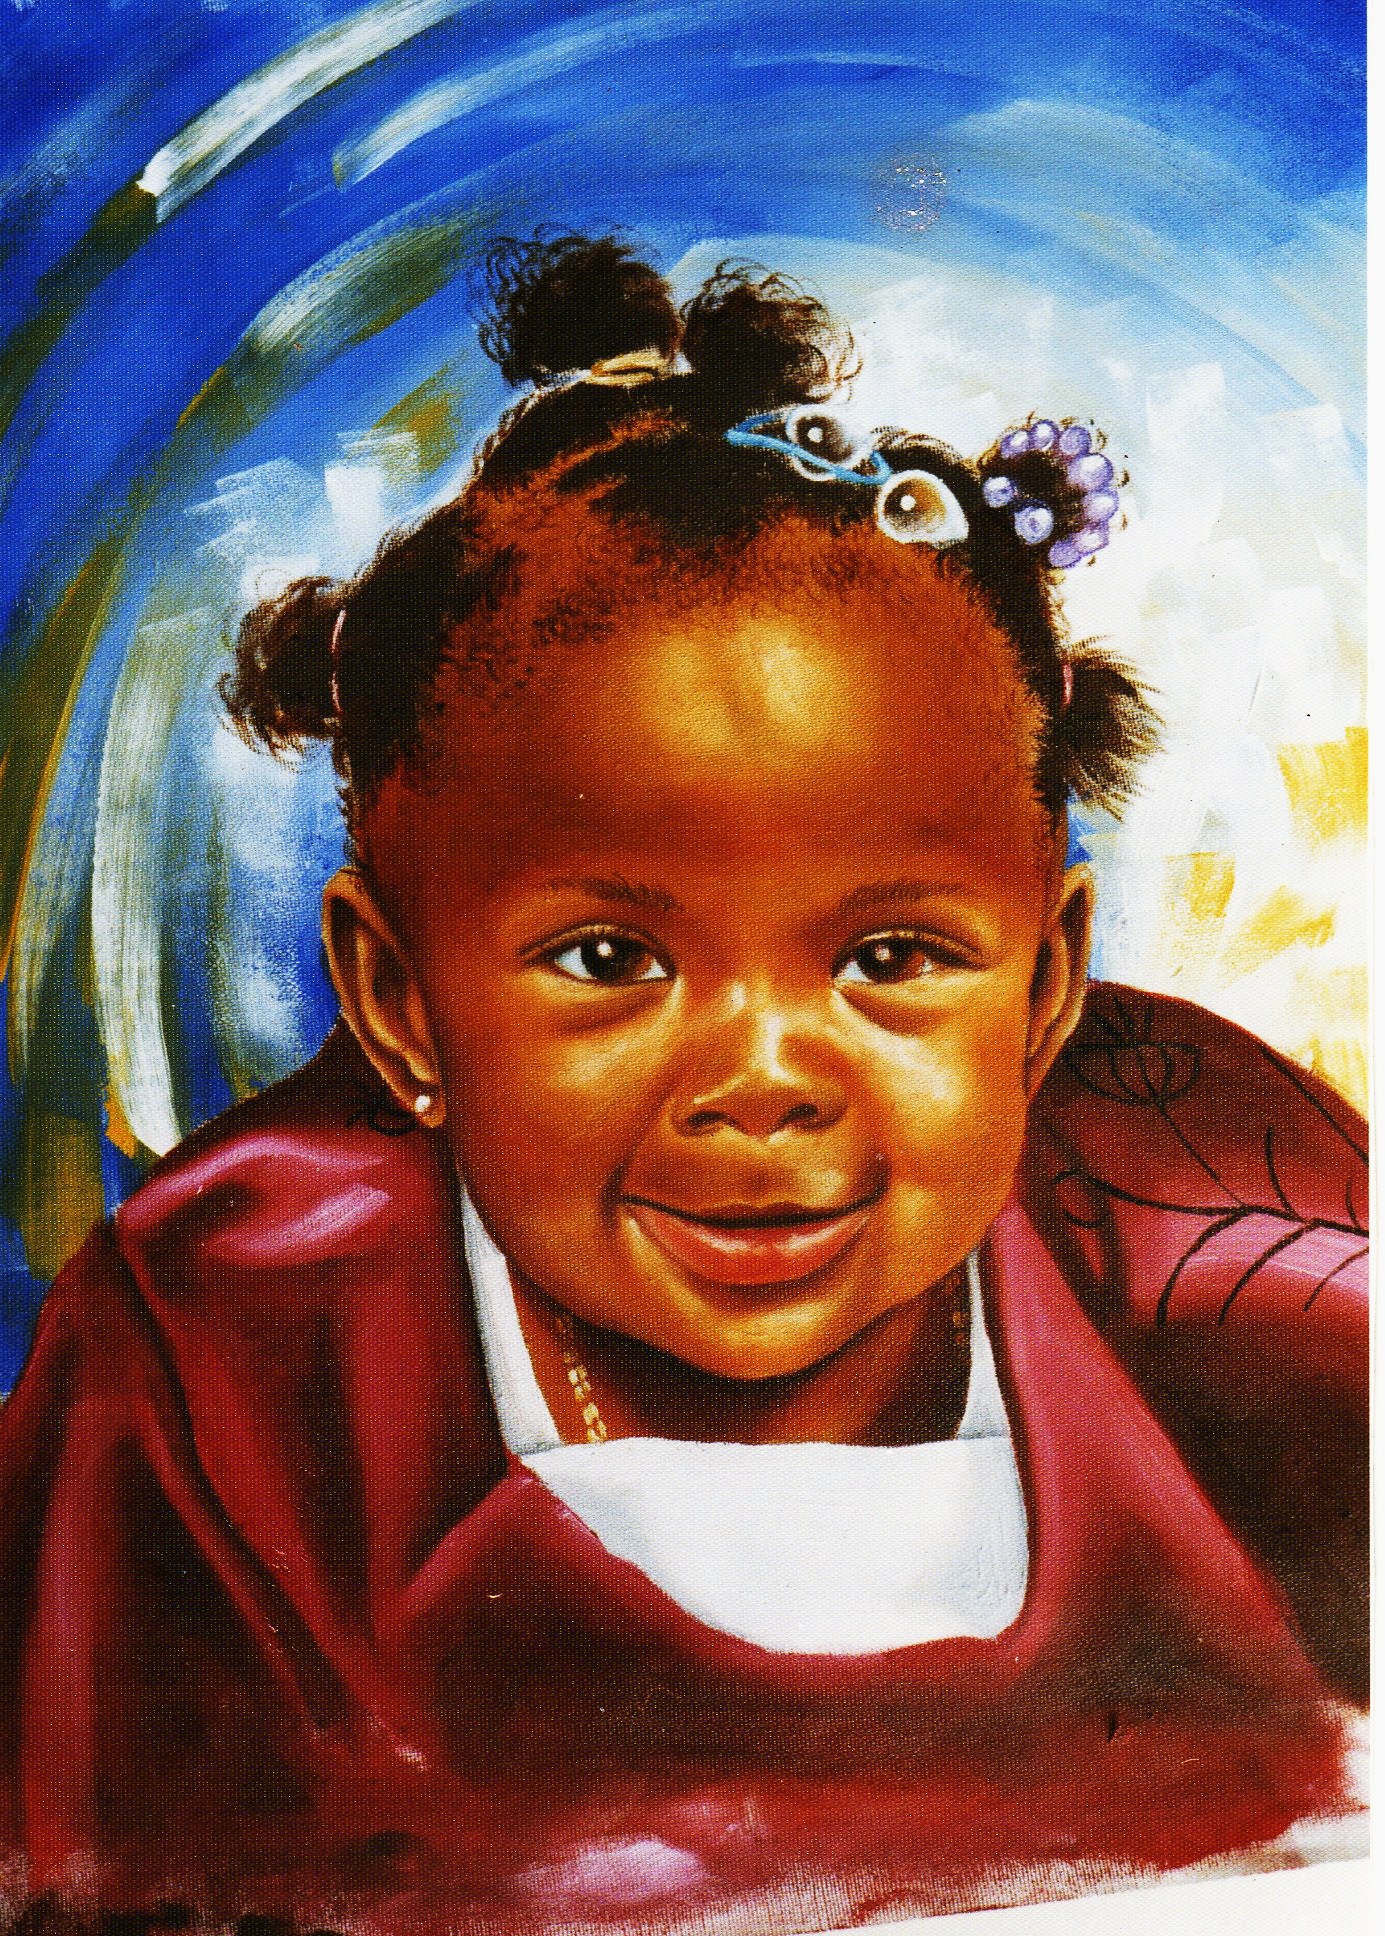 Oil portrait by Nkolika Anyabolu